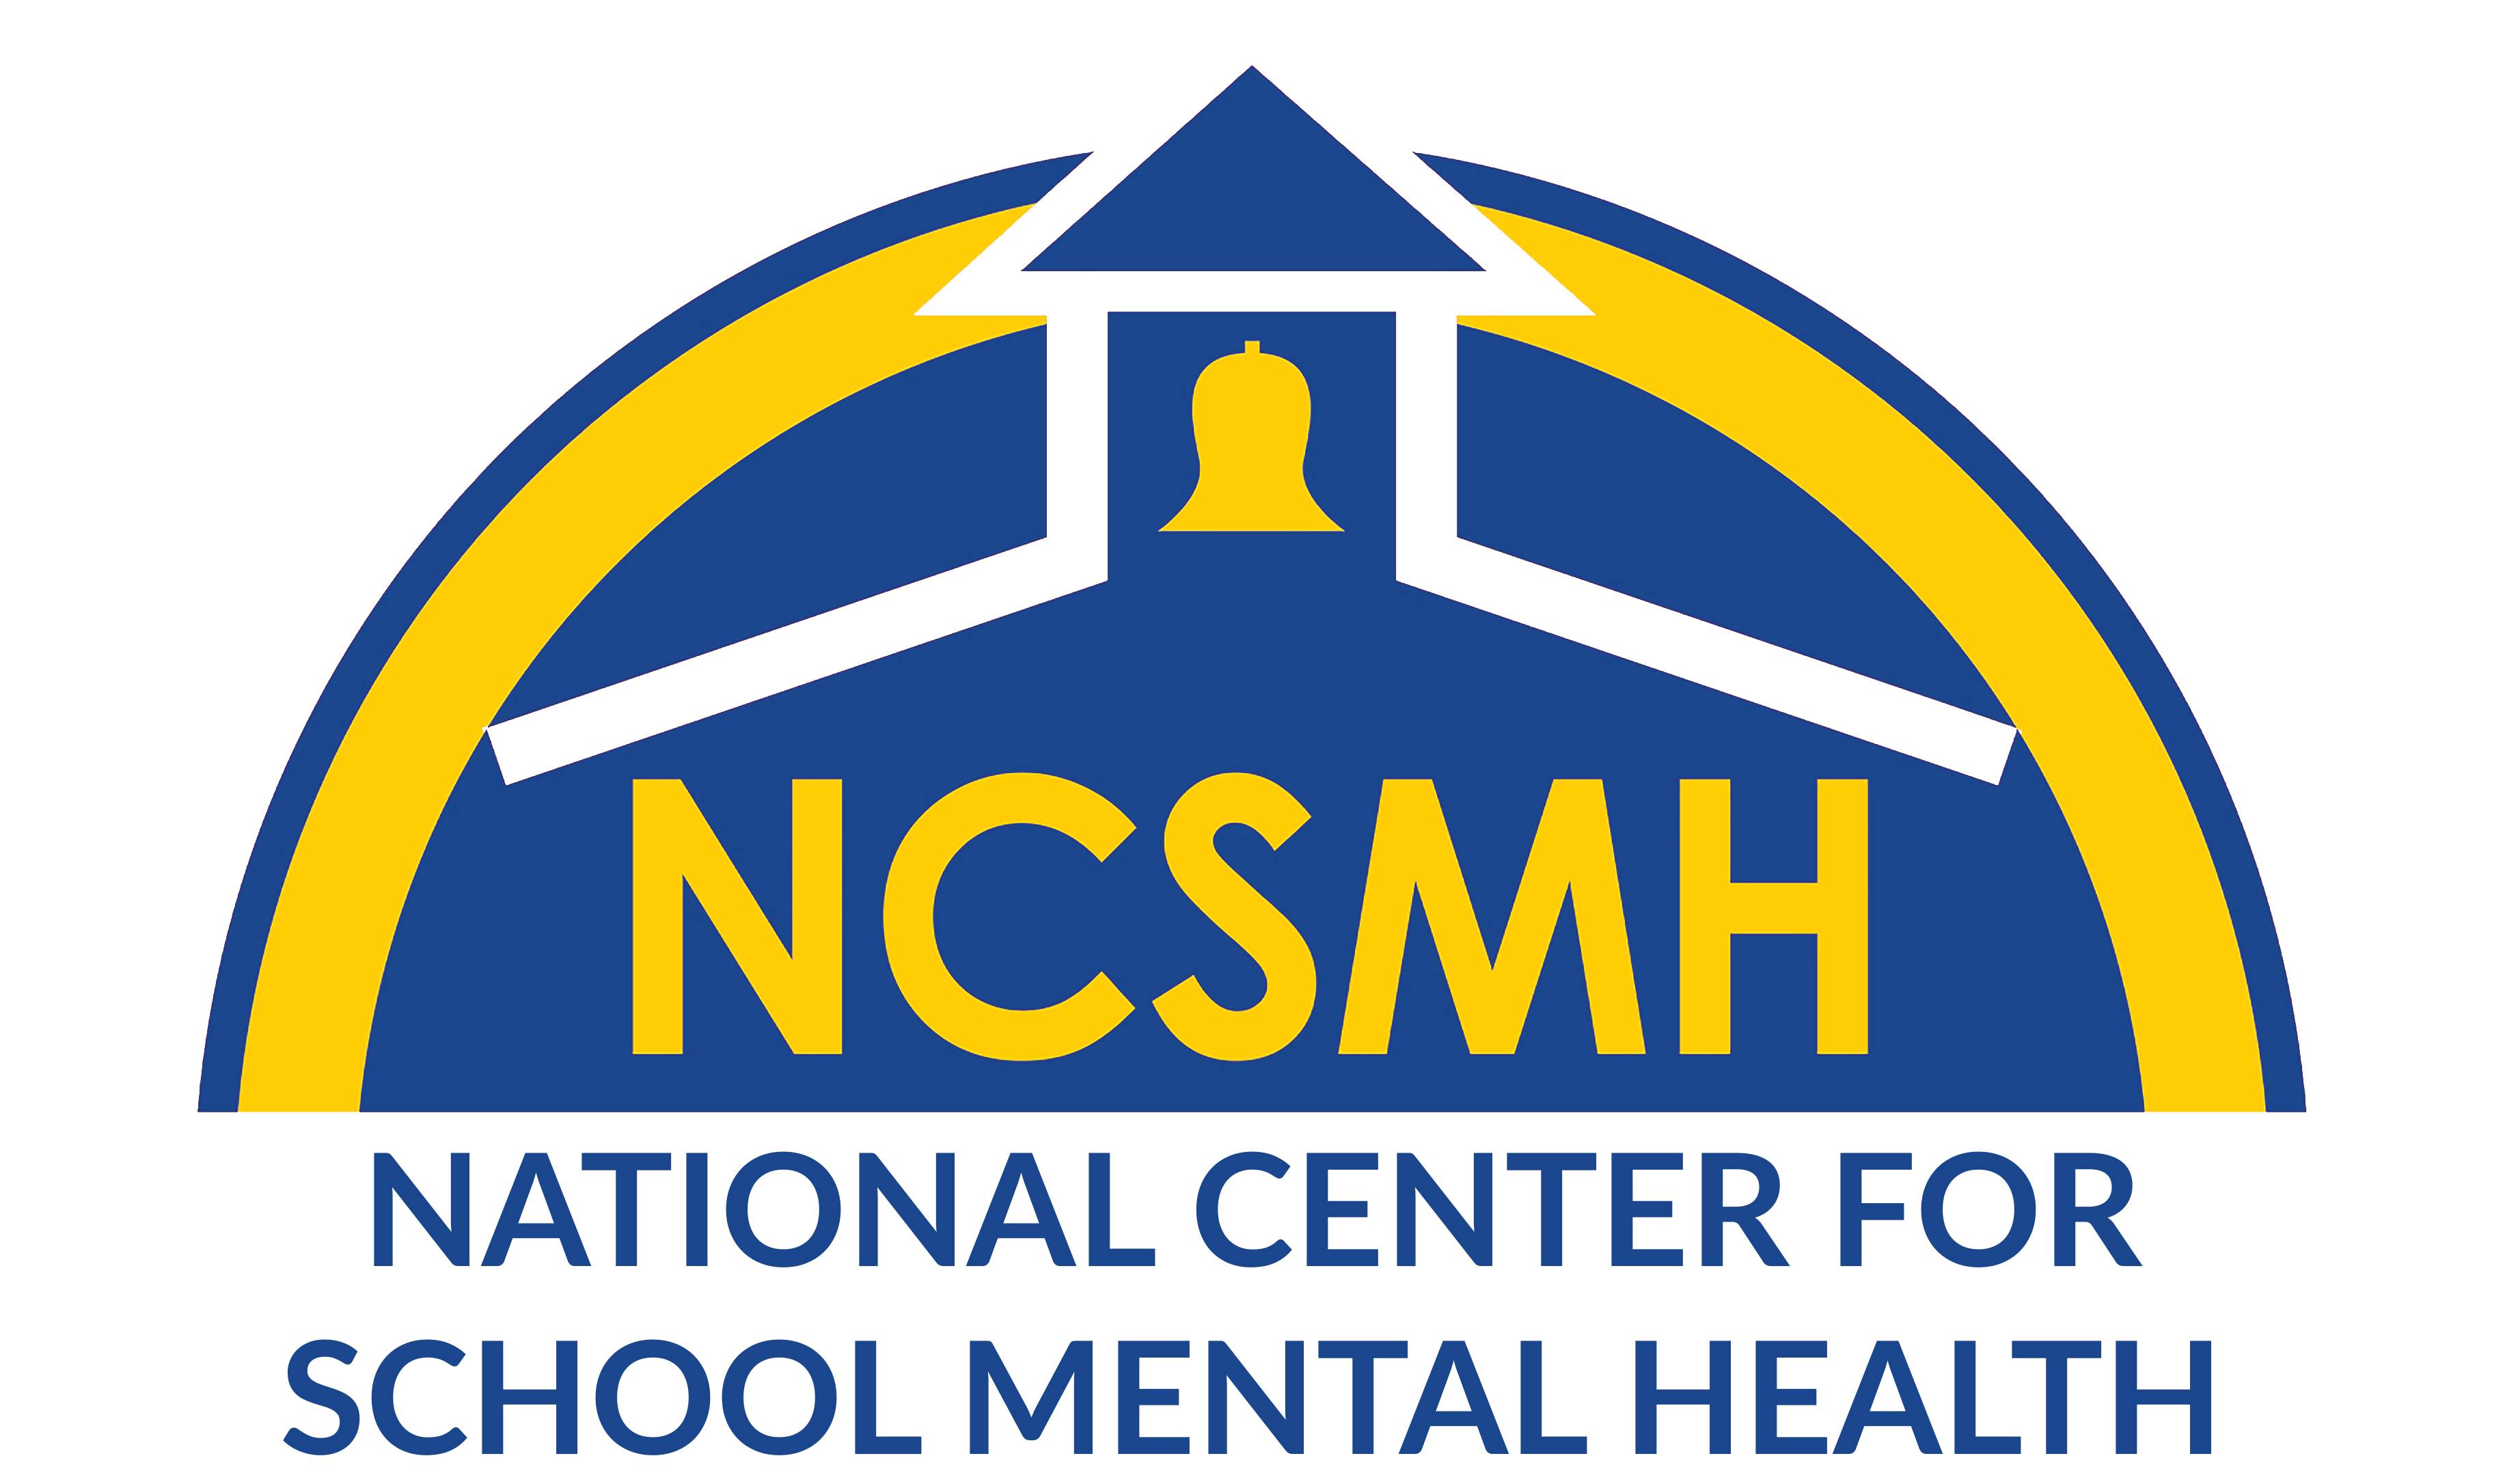 NCSMH: National Center for School Mental Health